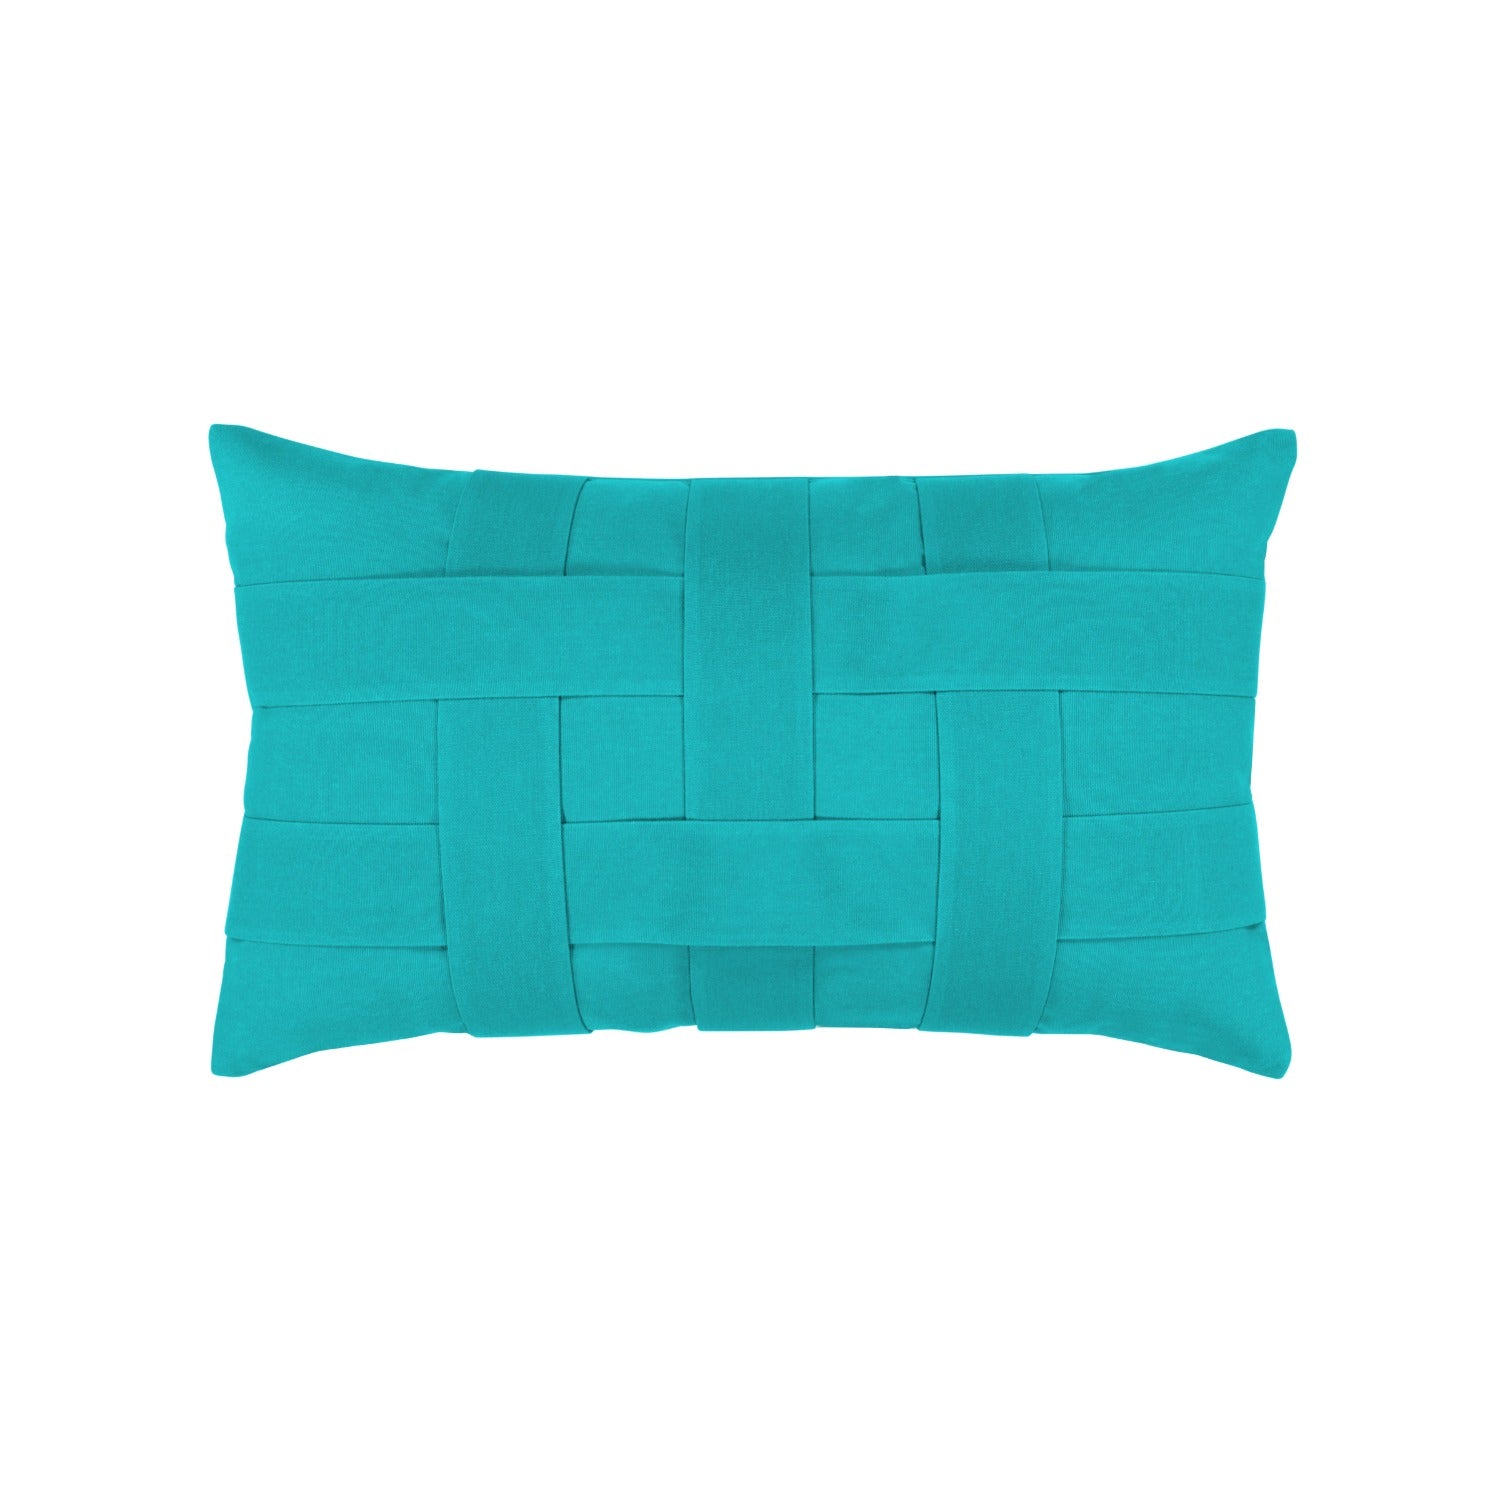 Elaine Smith Basketweave Aruba Lumbar Pillow 12042572